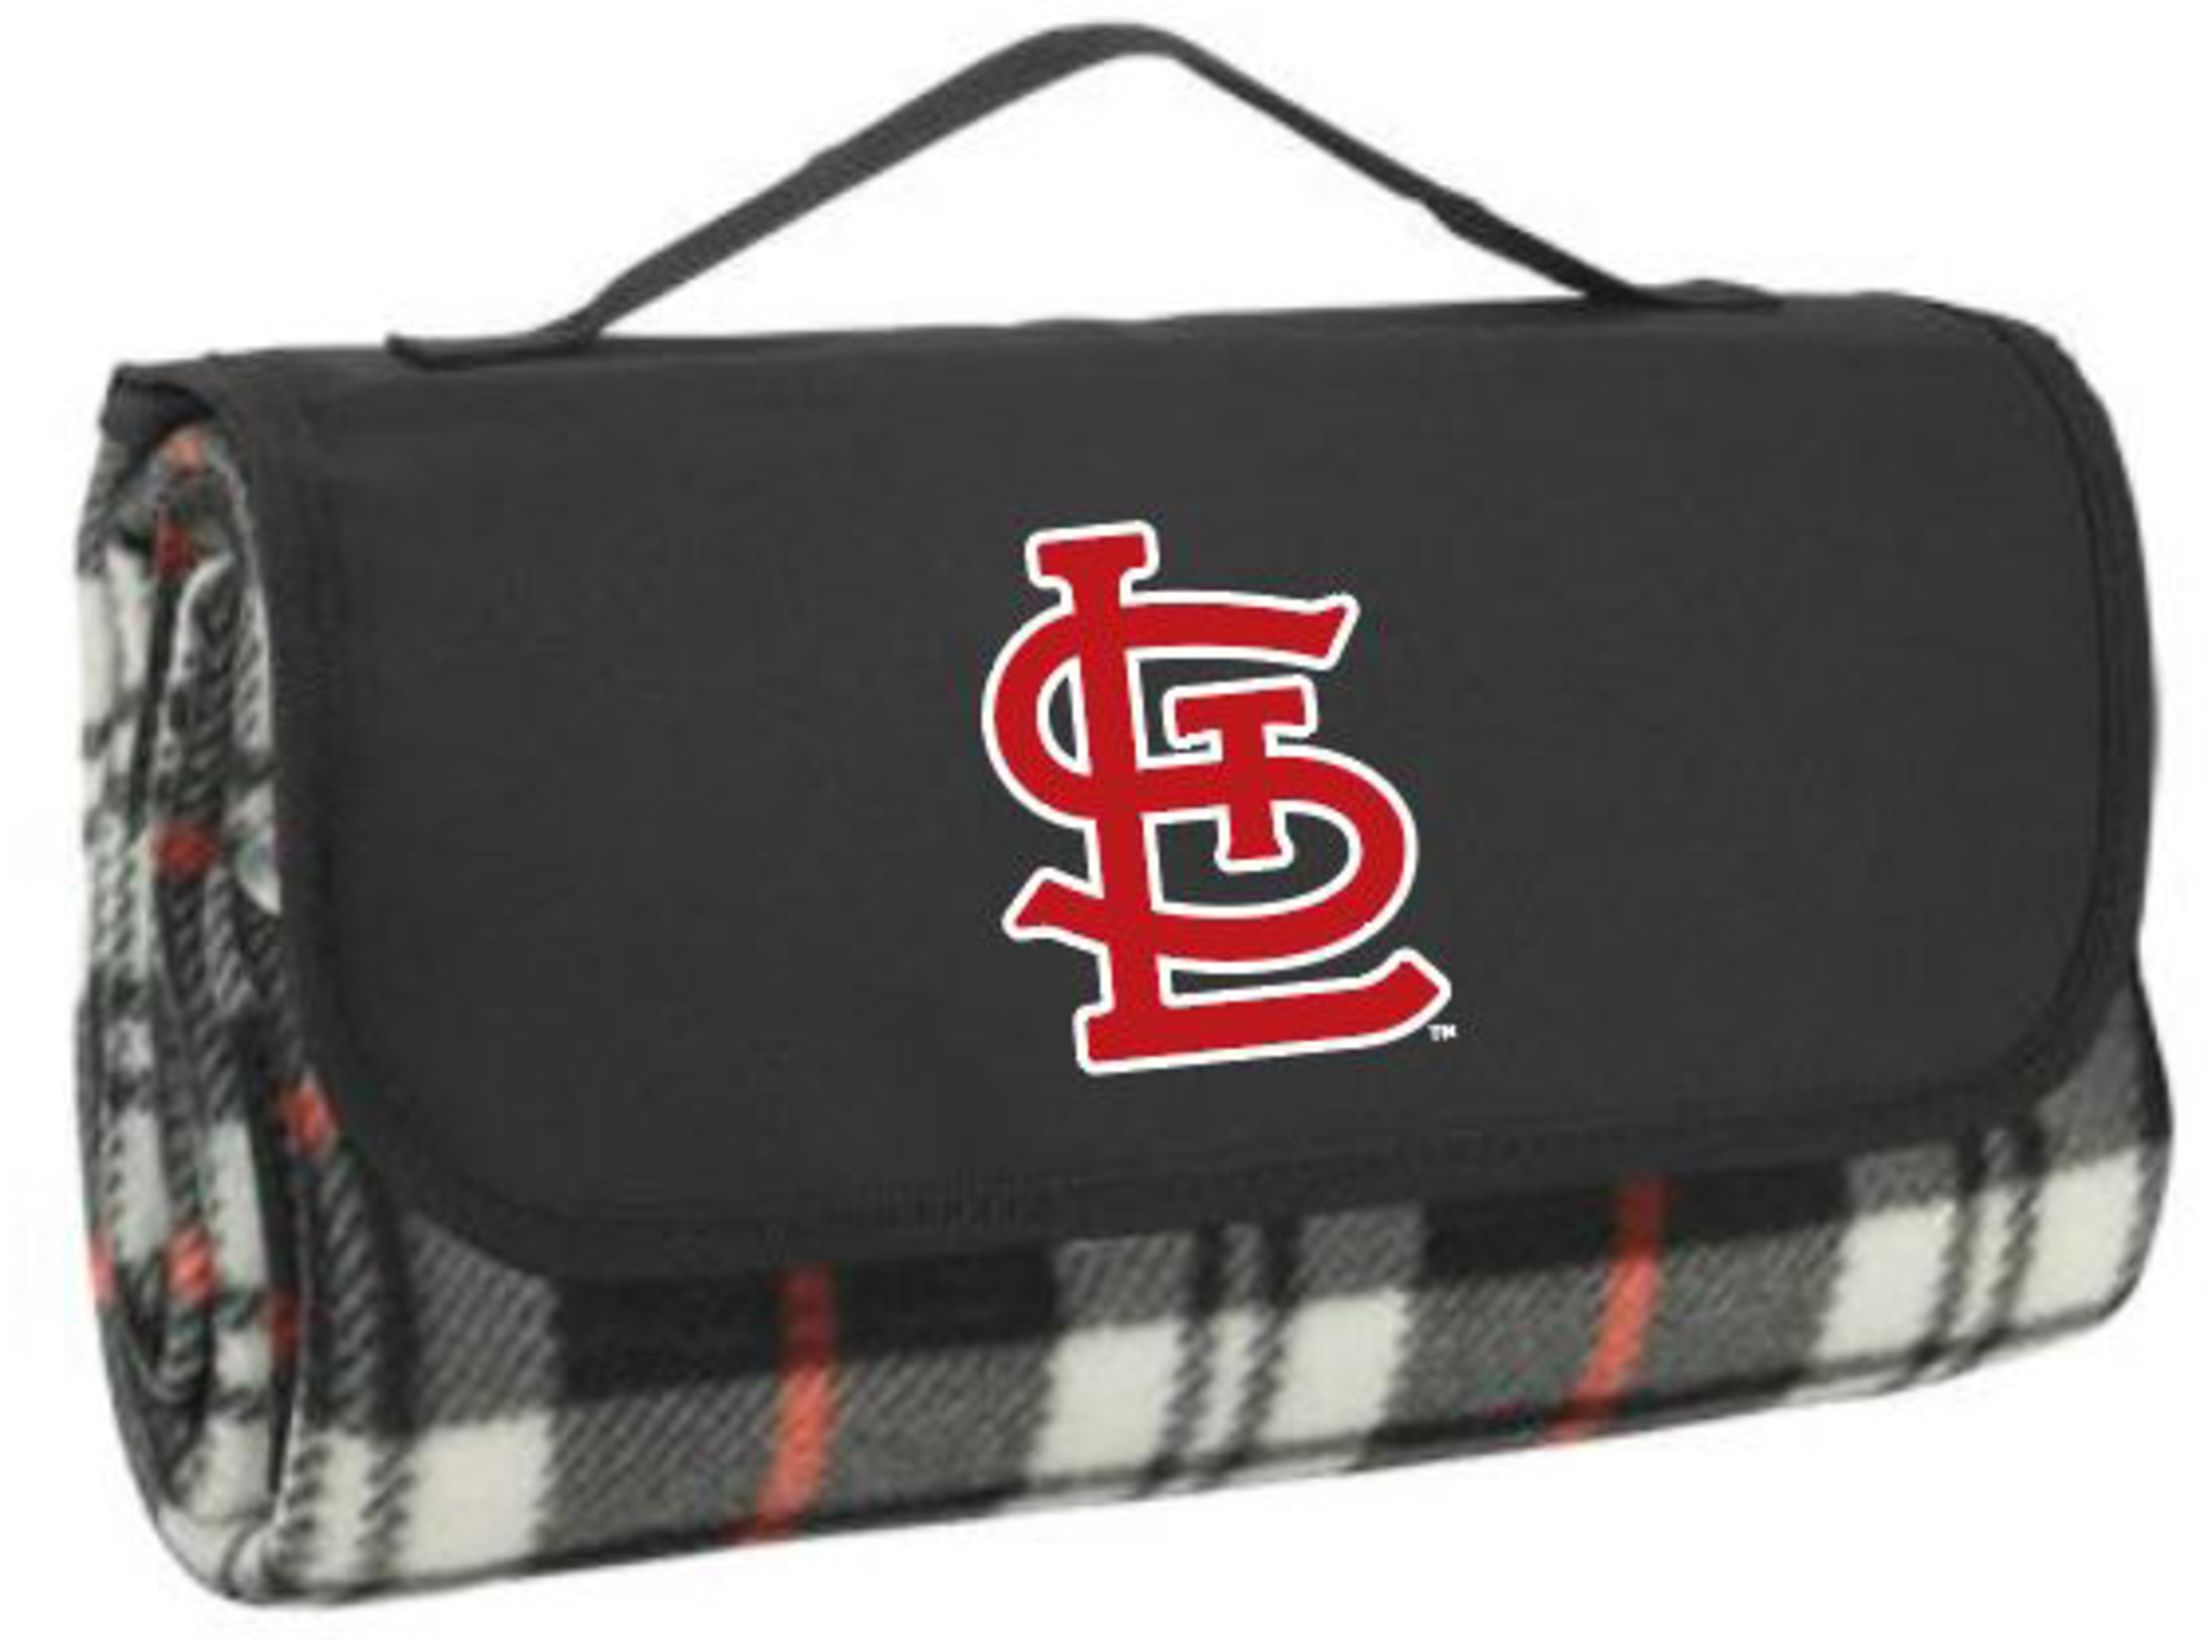 Mlb St. Louis Cardinals Peanut Bag Toy : Target